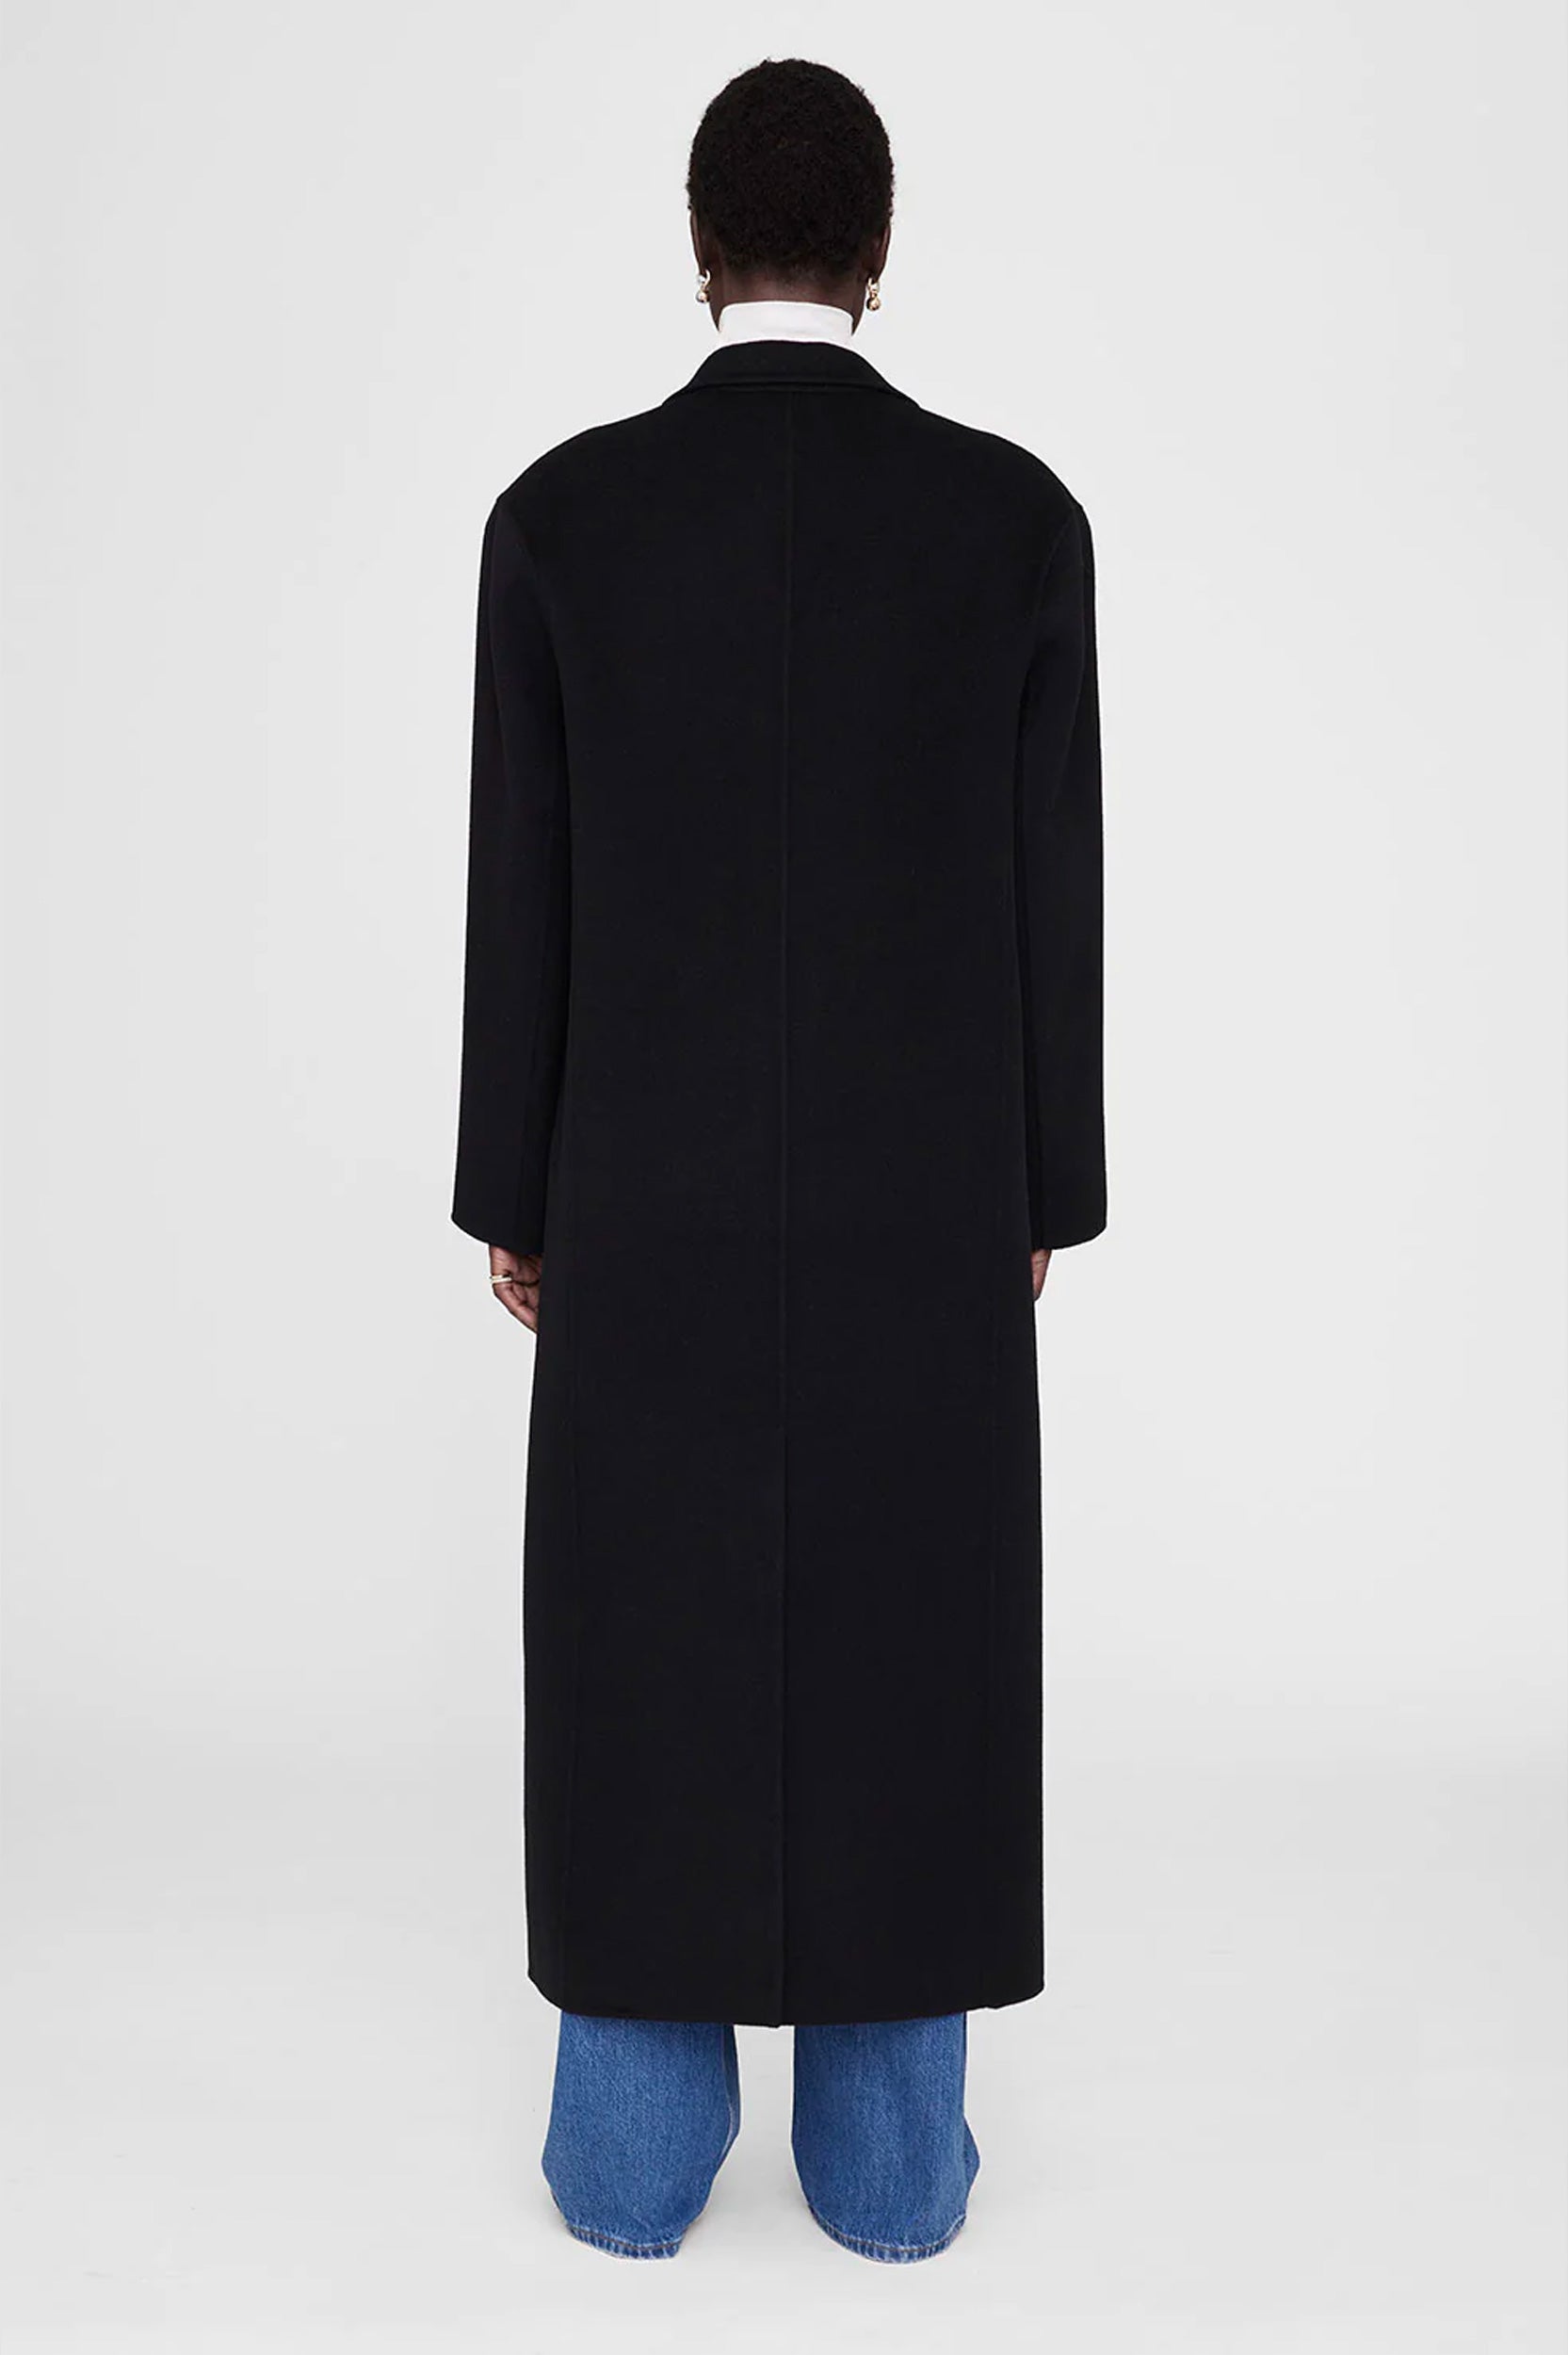 Quinn Coat in Black Cashmere Blend